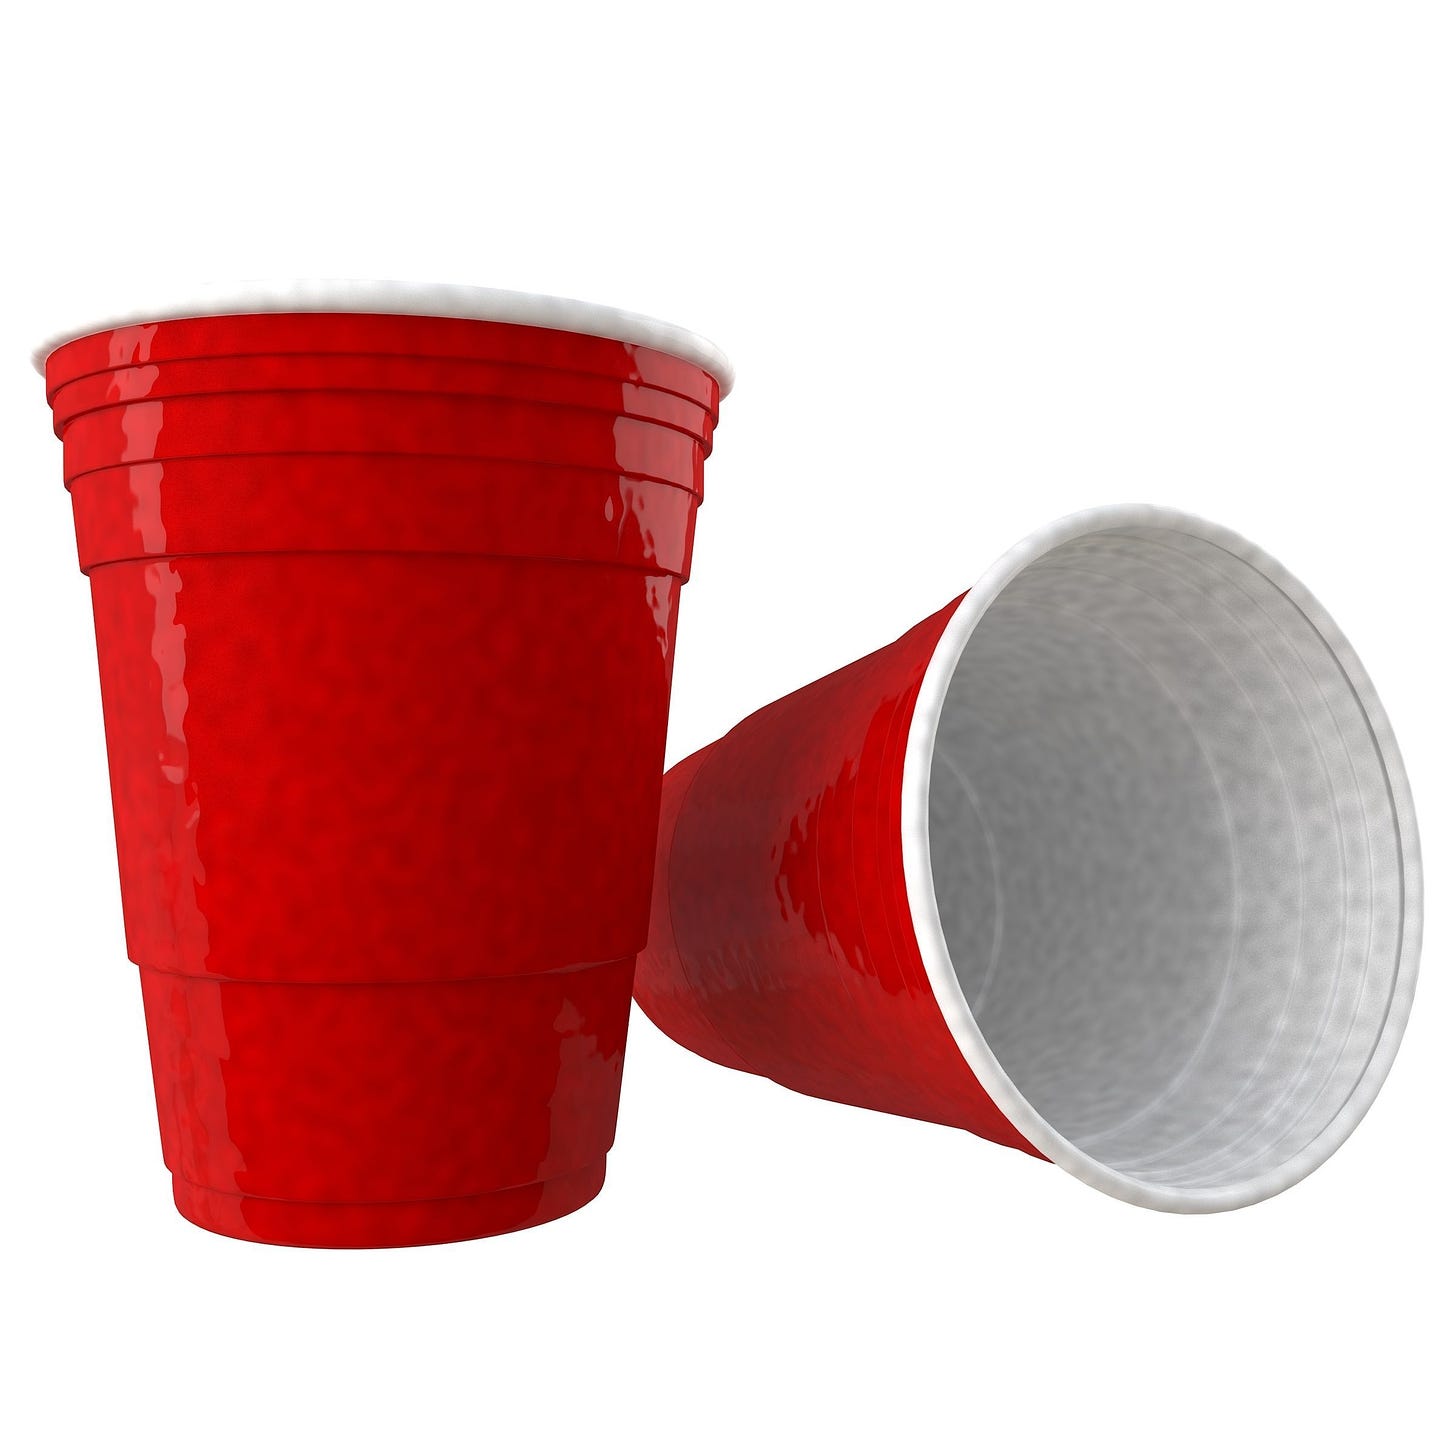 https://img1.cgtrader.com/items/2296246/f9d6e9a6f9/red-solo-cup-3d-model-max-obj-3ds-fbx-c4d-lwo.jpg